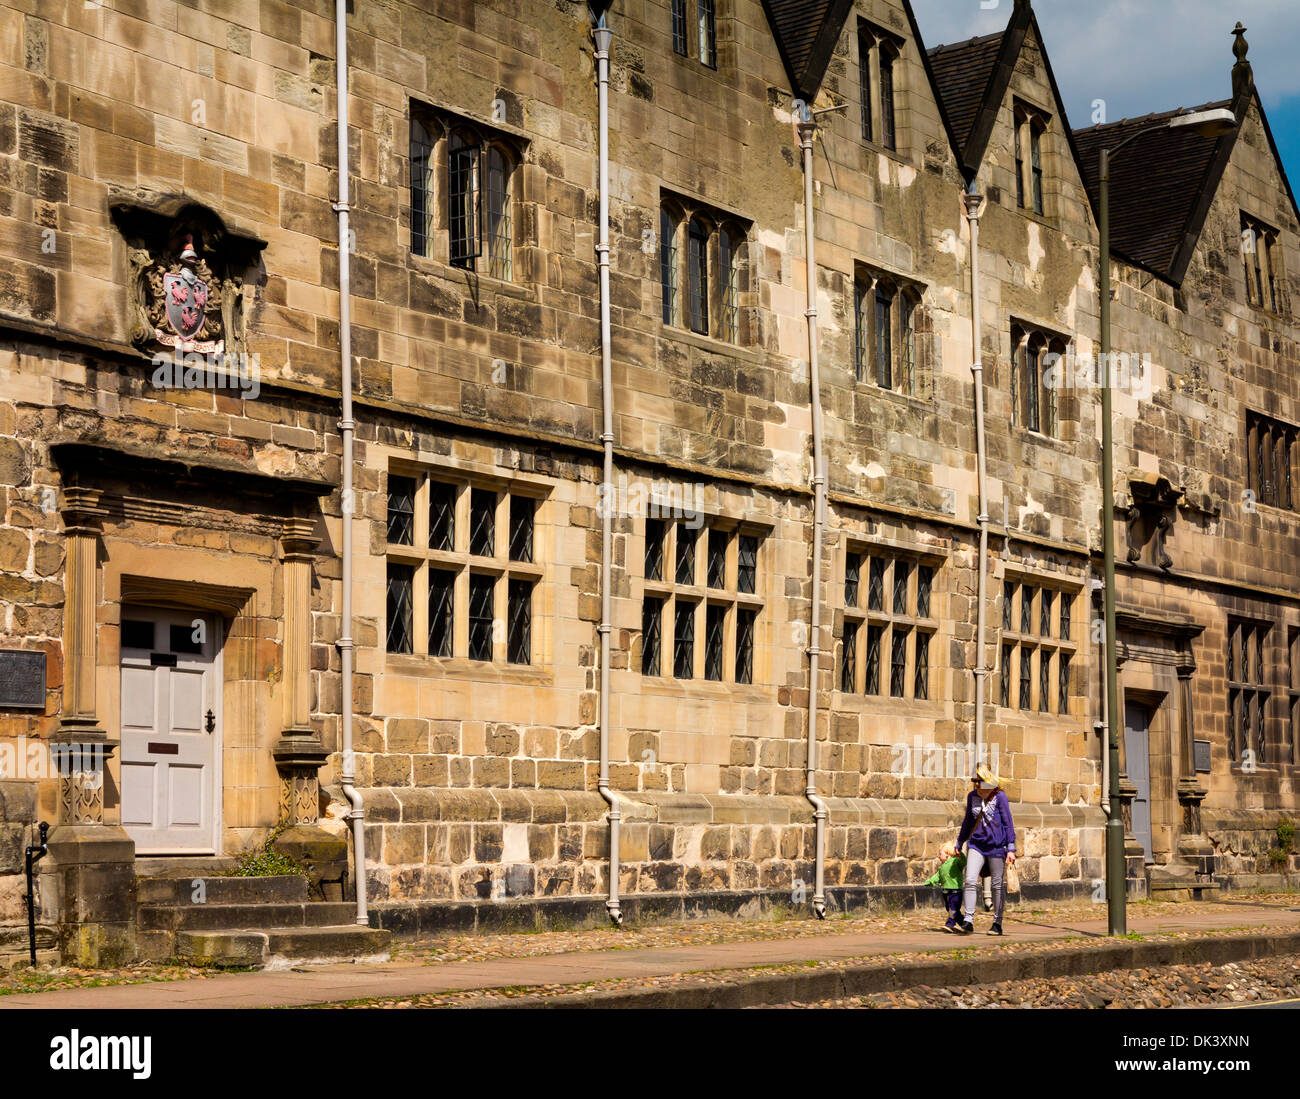 Queen Elizabeth's Grammar School in Ashbourne Derbyshire Peak District England UK built 1585 now converted into private housing Stock Photo